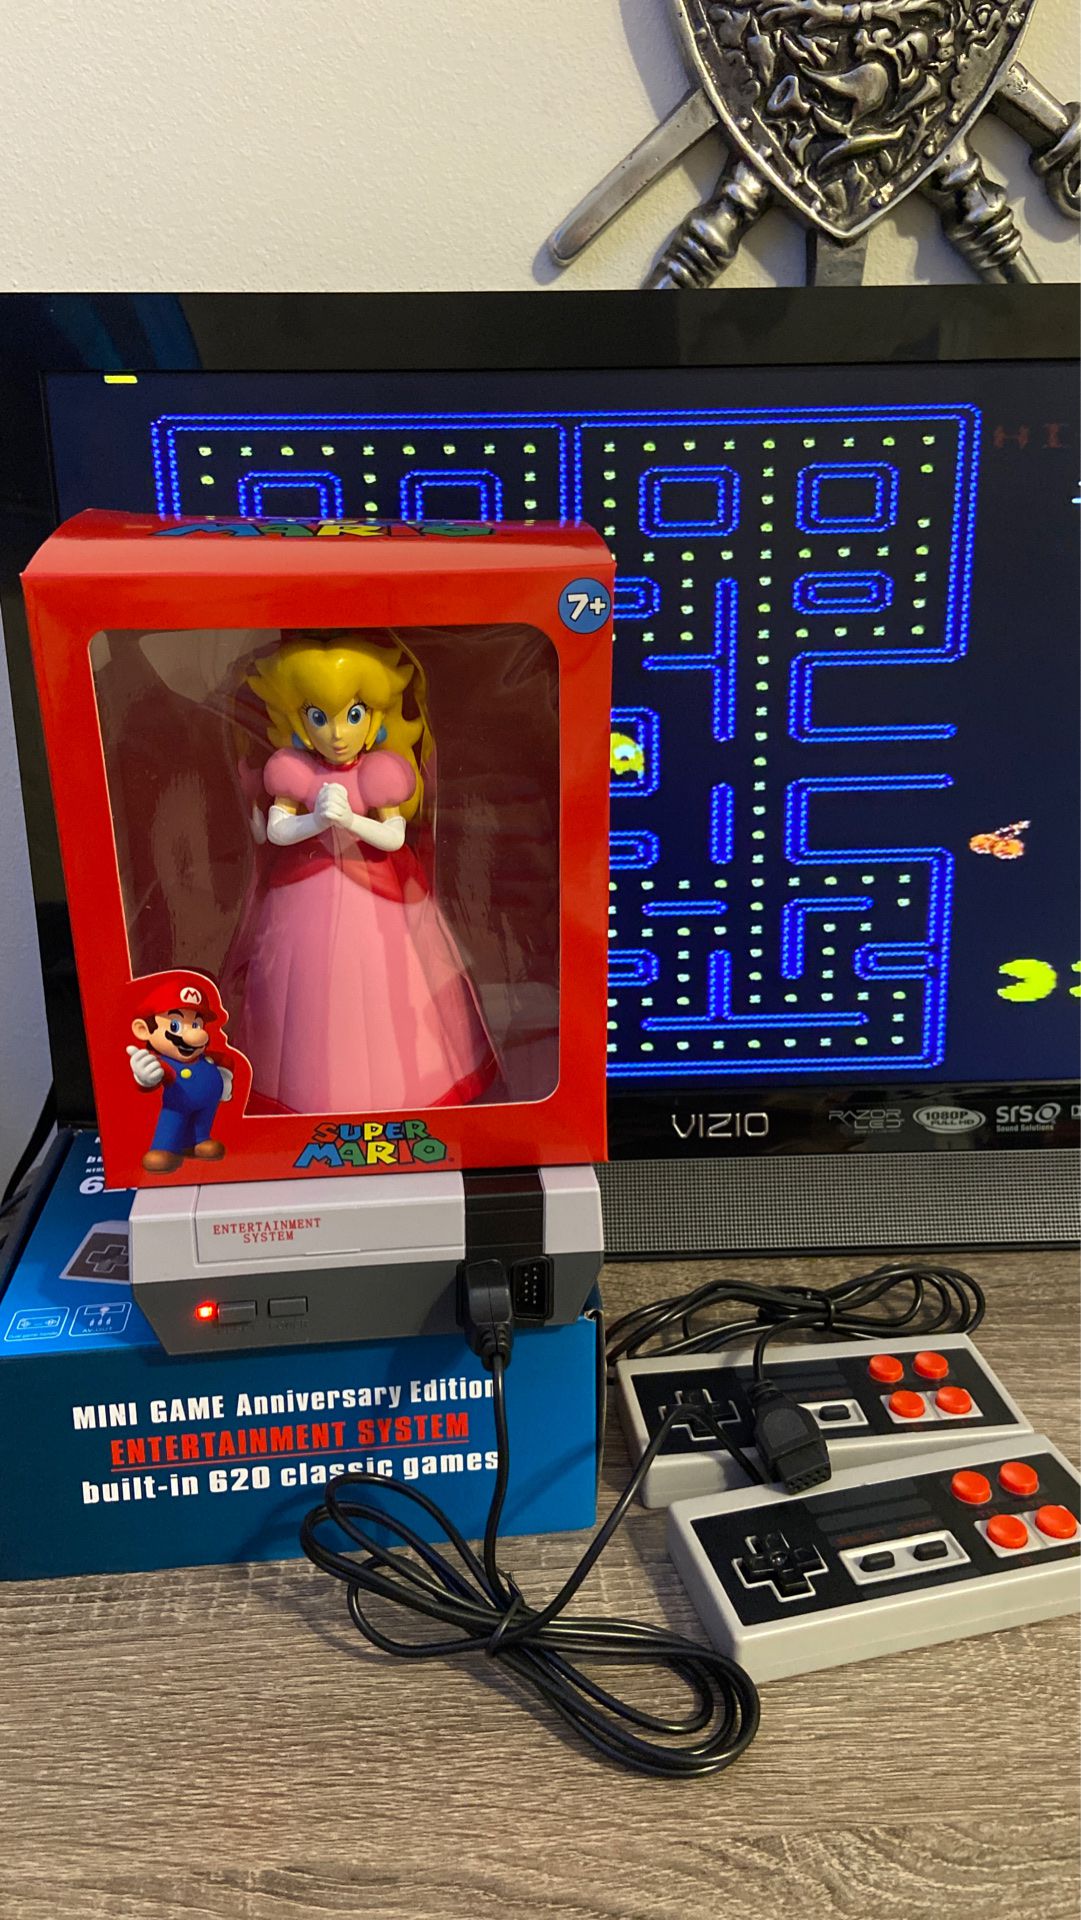 Old classic games arcade retro Anniversary Edition built in 620 games * +Princess Peach